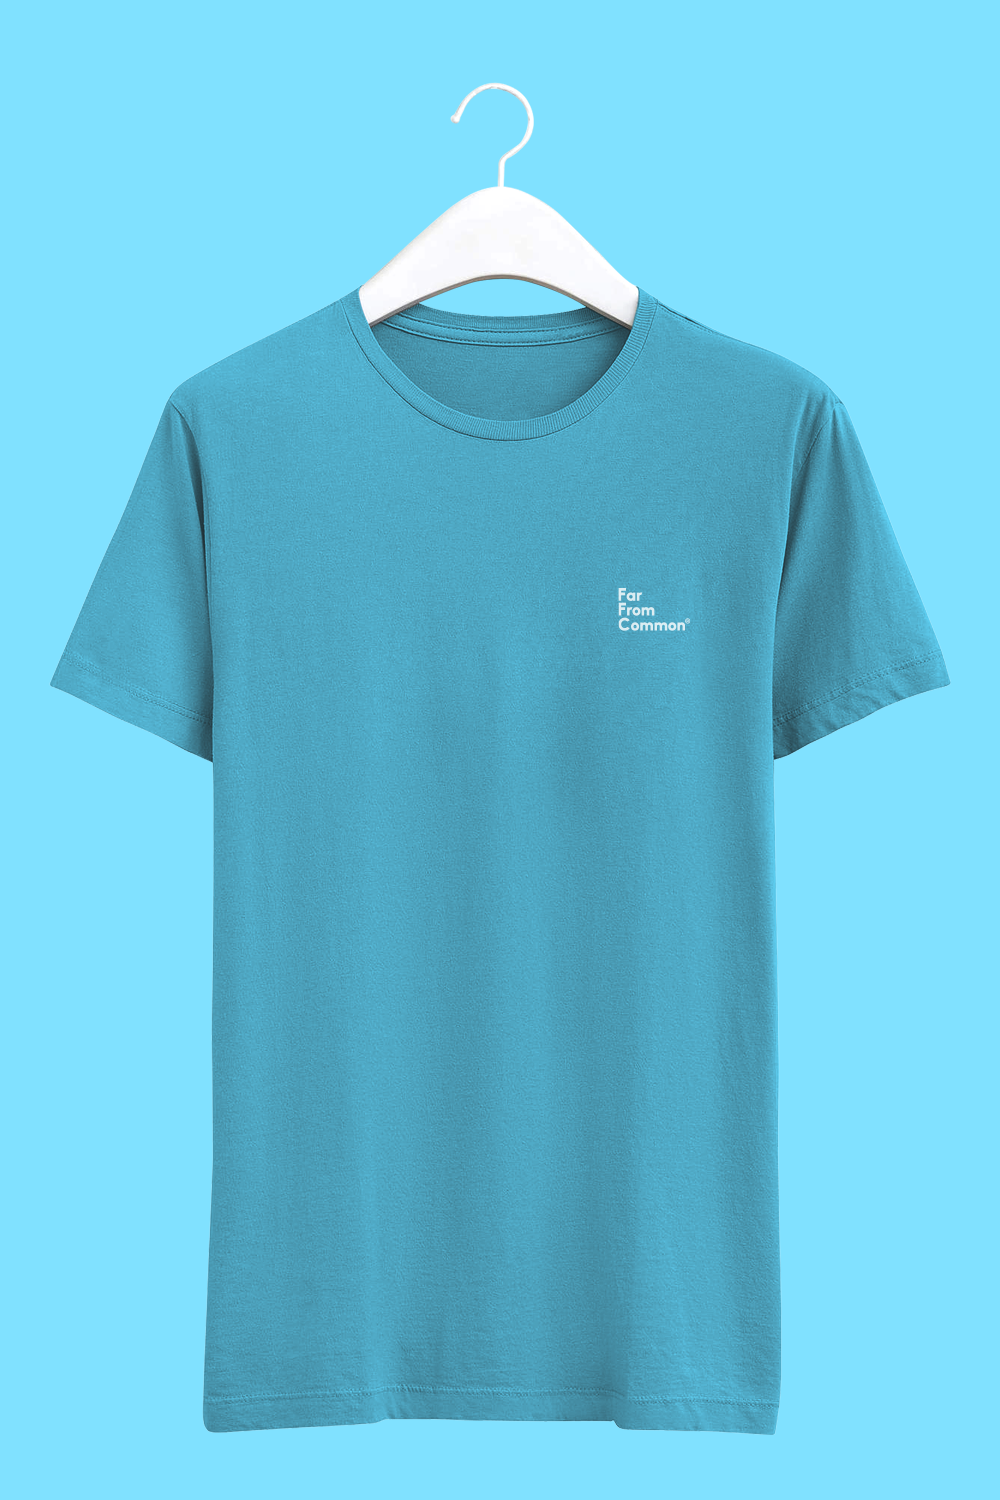 Unisex Basics T-shirt Sky Blue